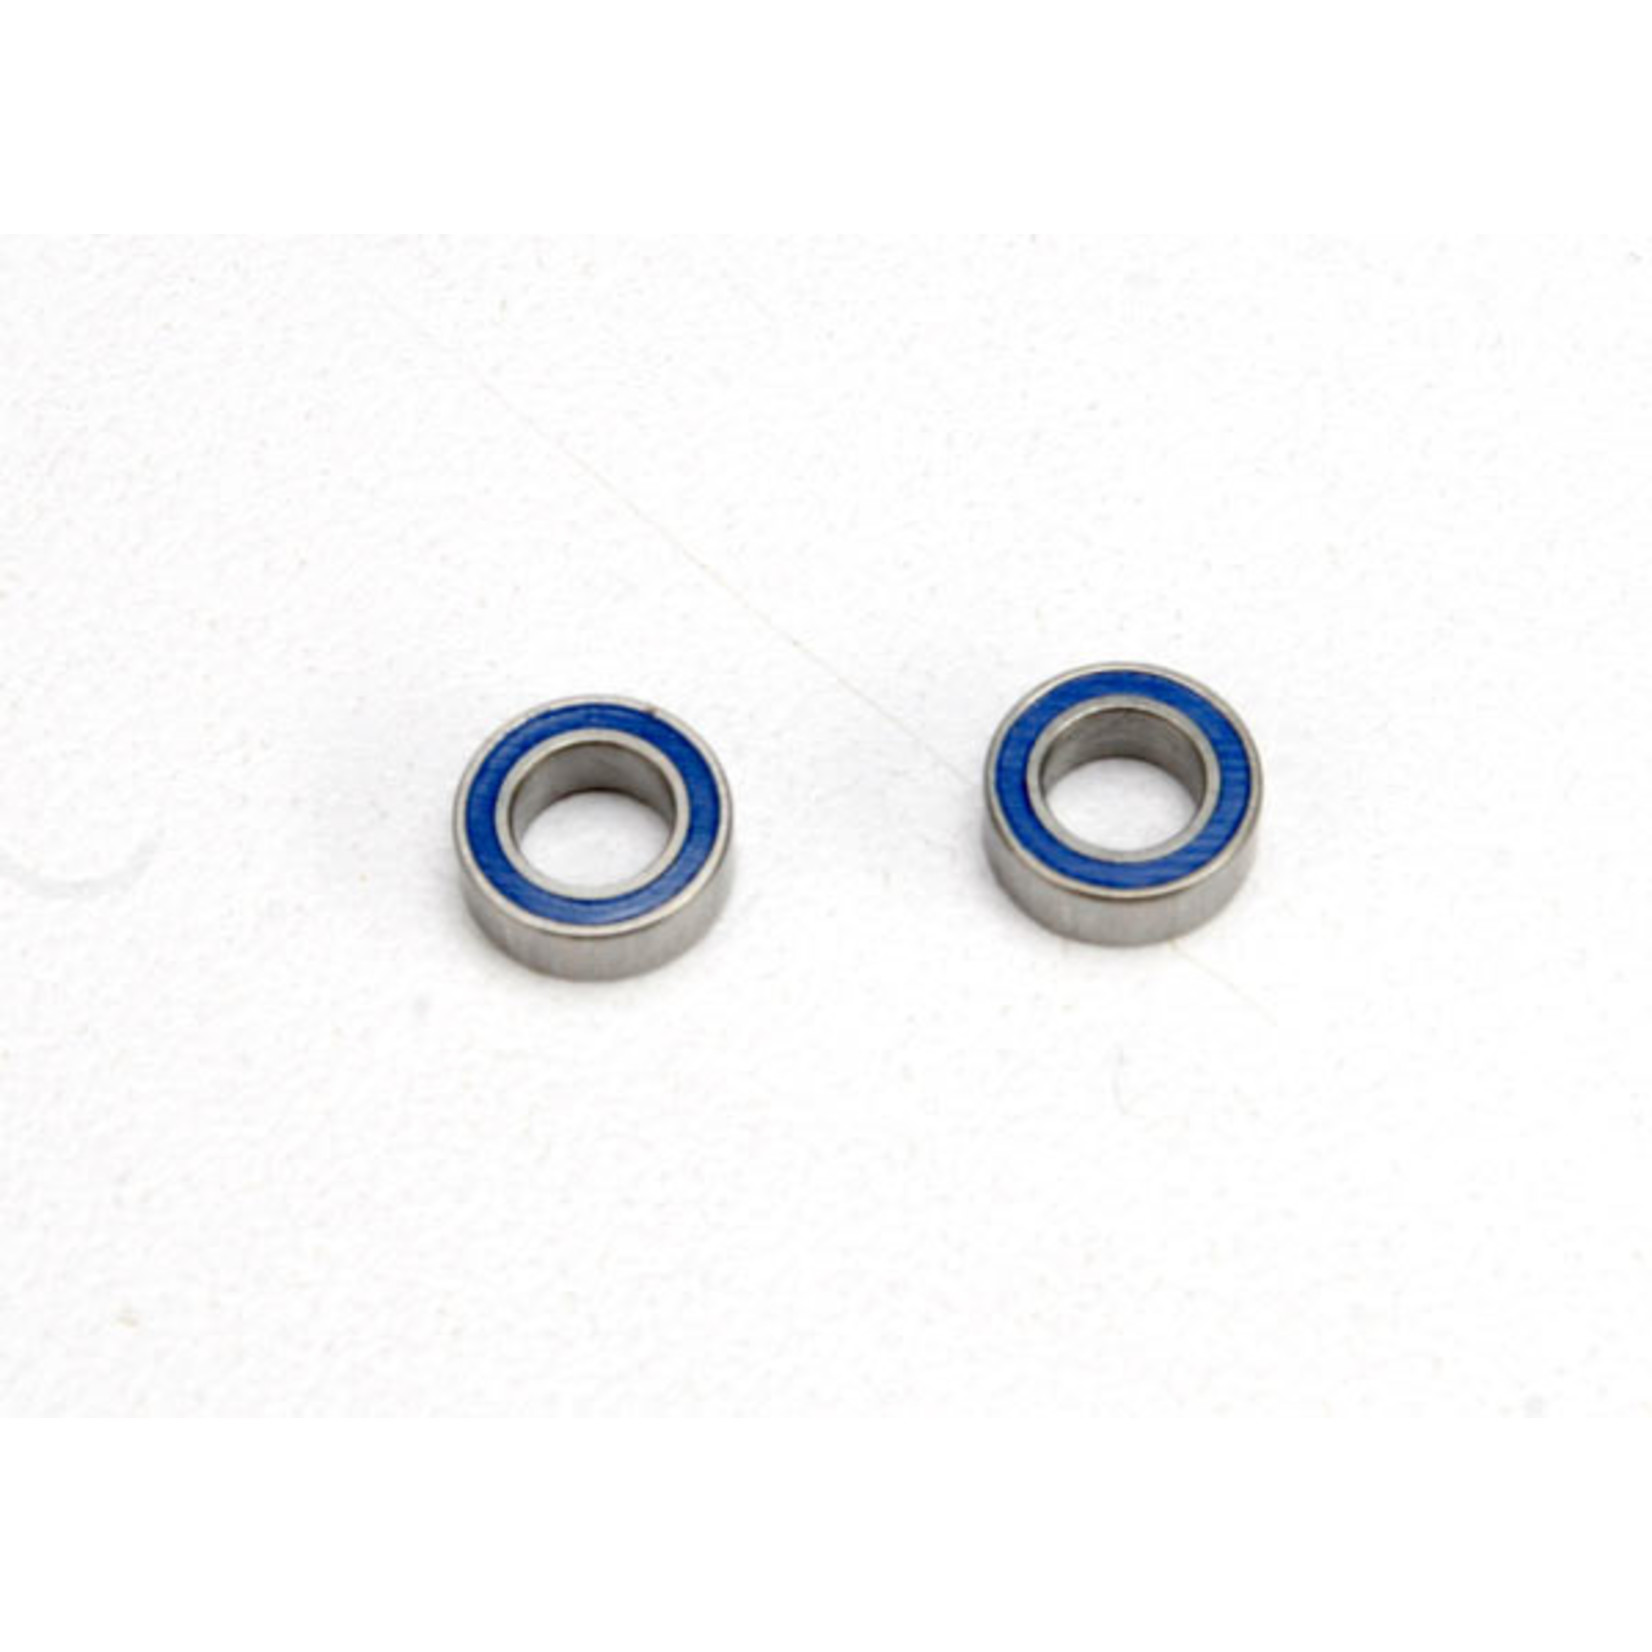 Traxxas 5124 - Ball bearings, blue rubber sealed (4x7x2.5m